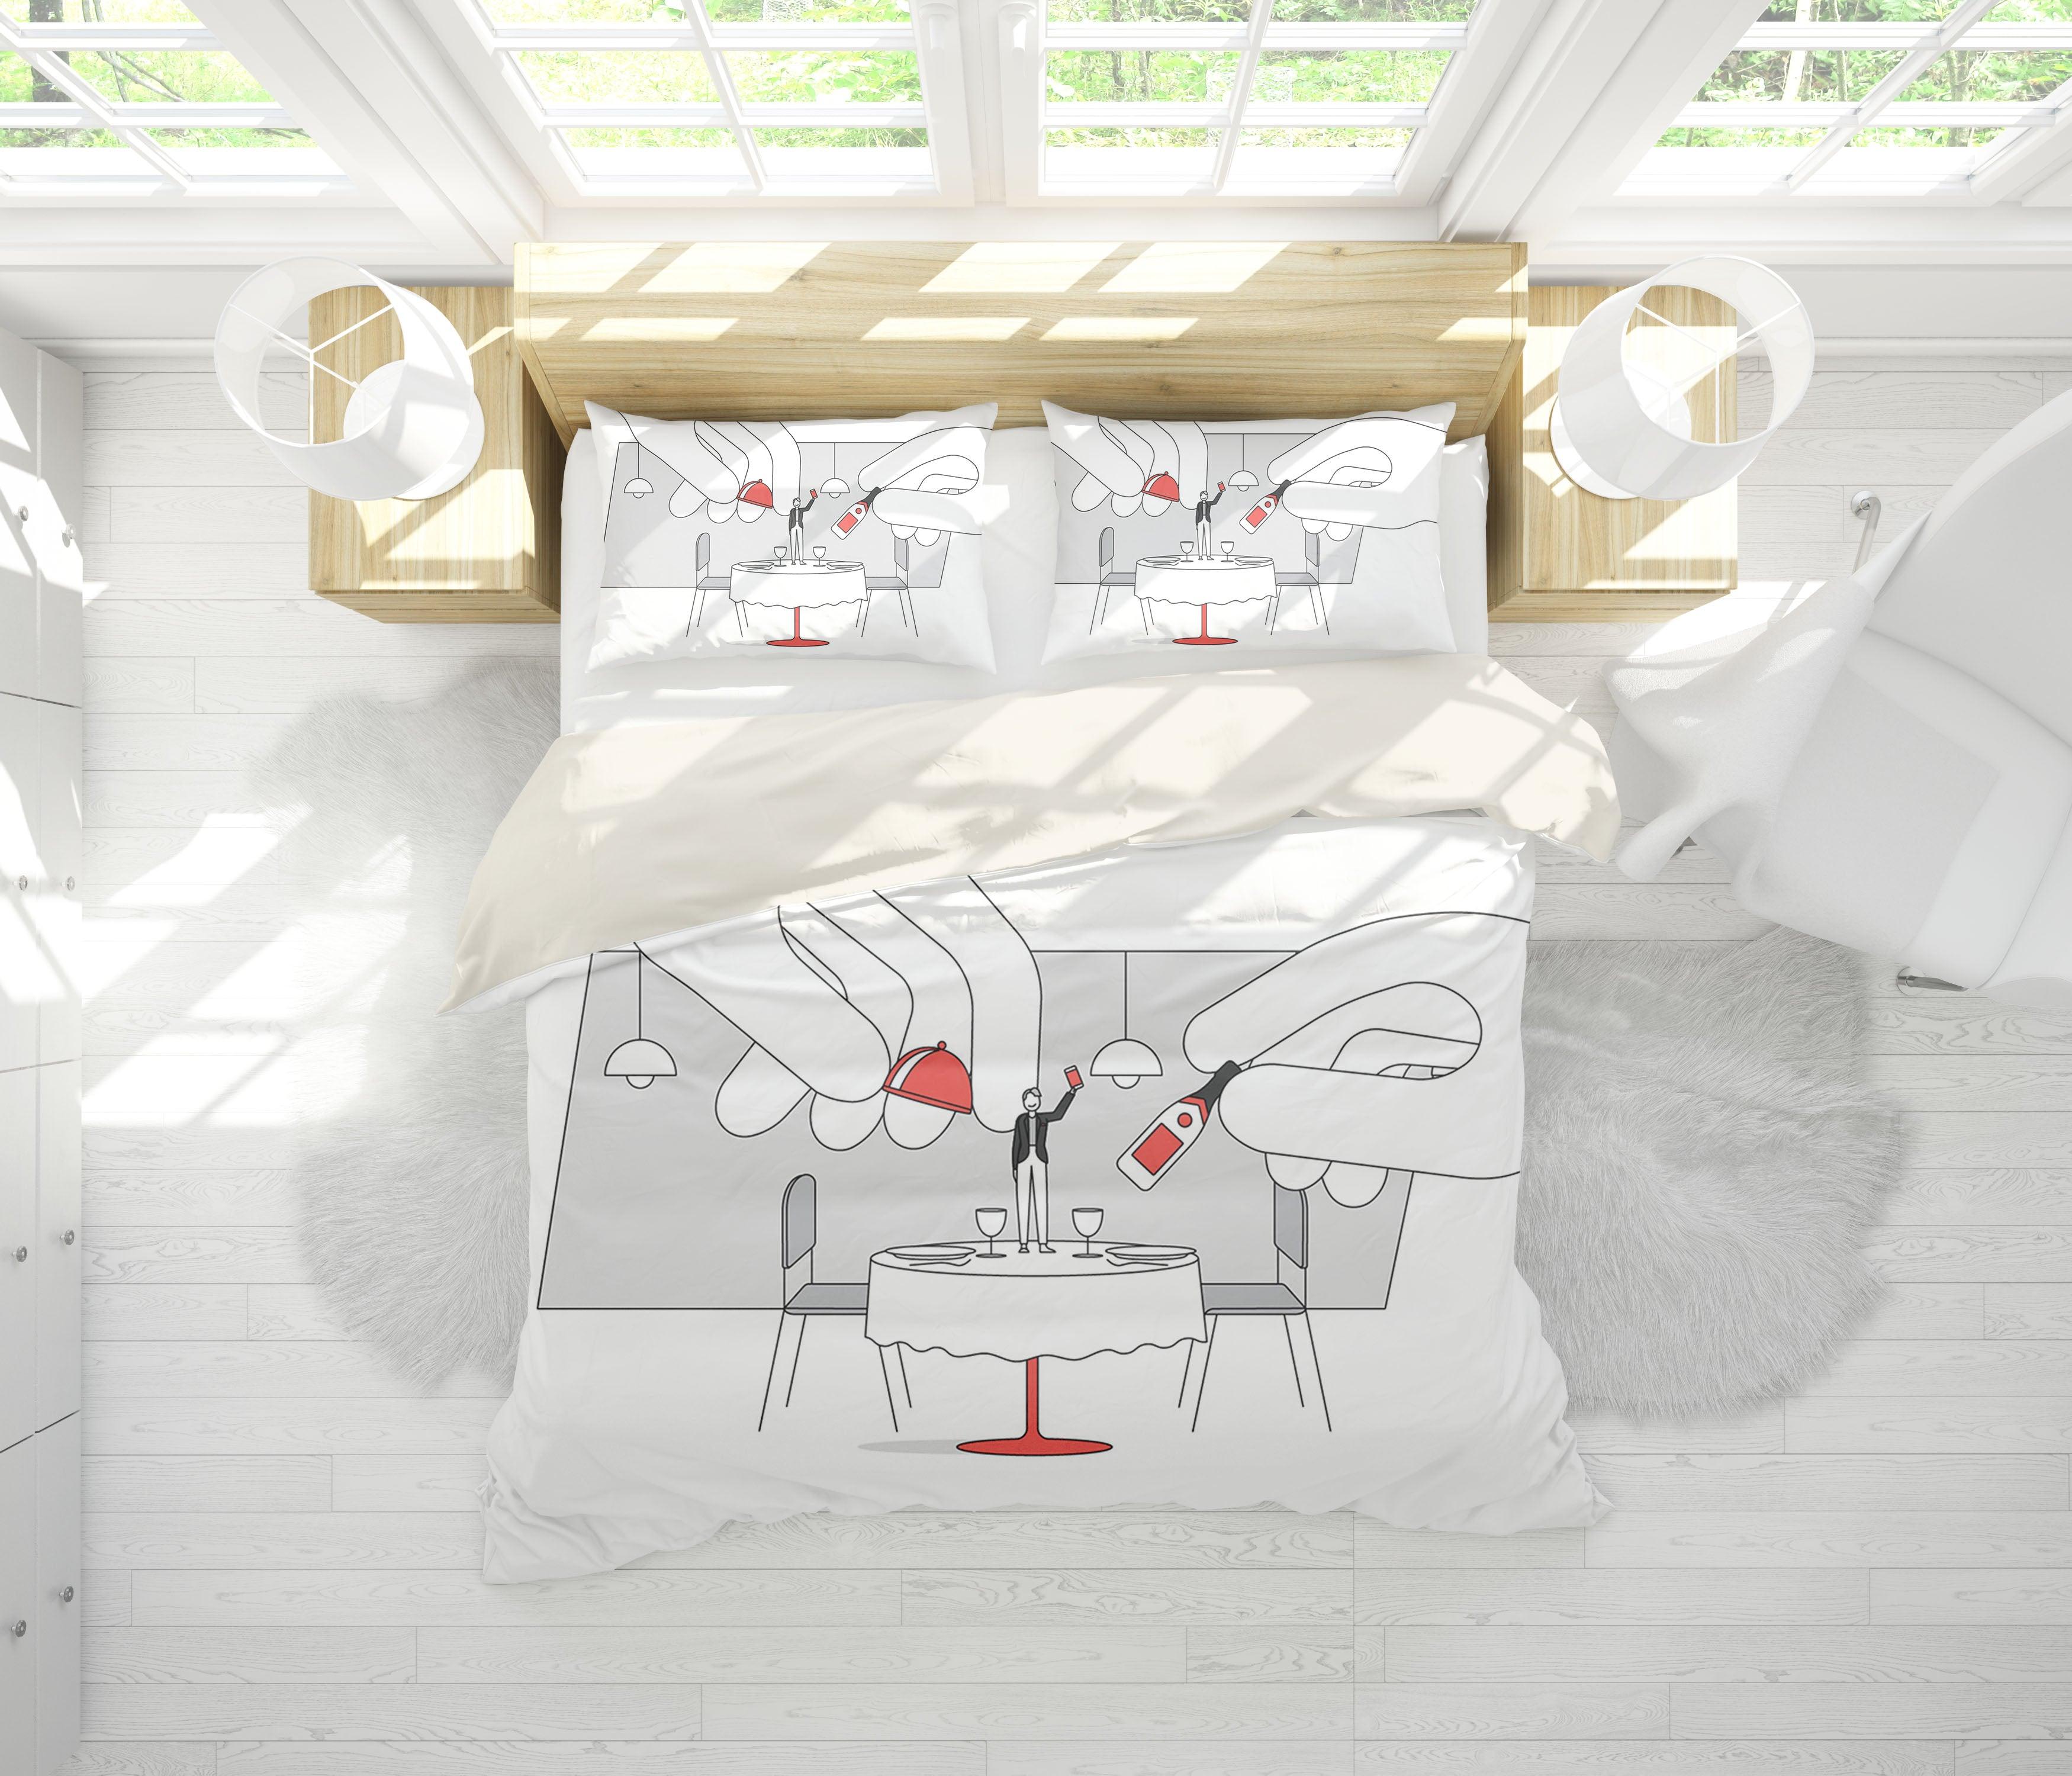 3D Table Wine Glass Quilt Cover Set Bedding Set Pillowcases 136- Jess Art Decoration